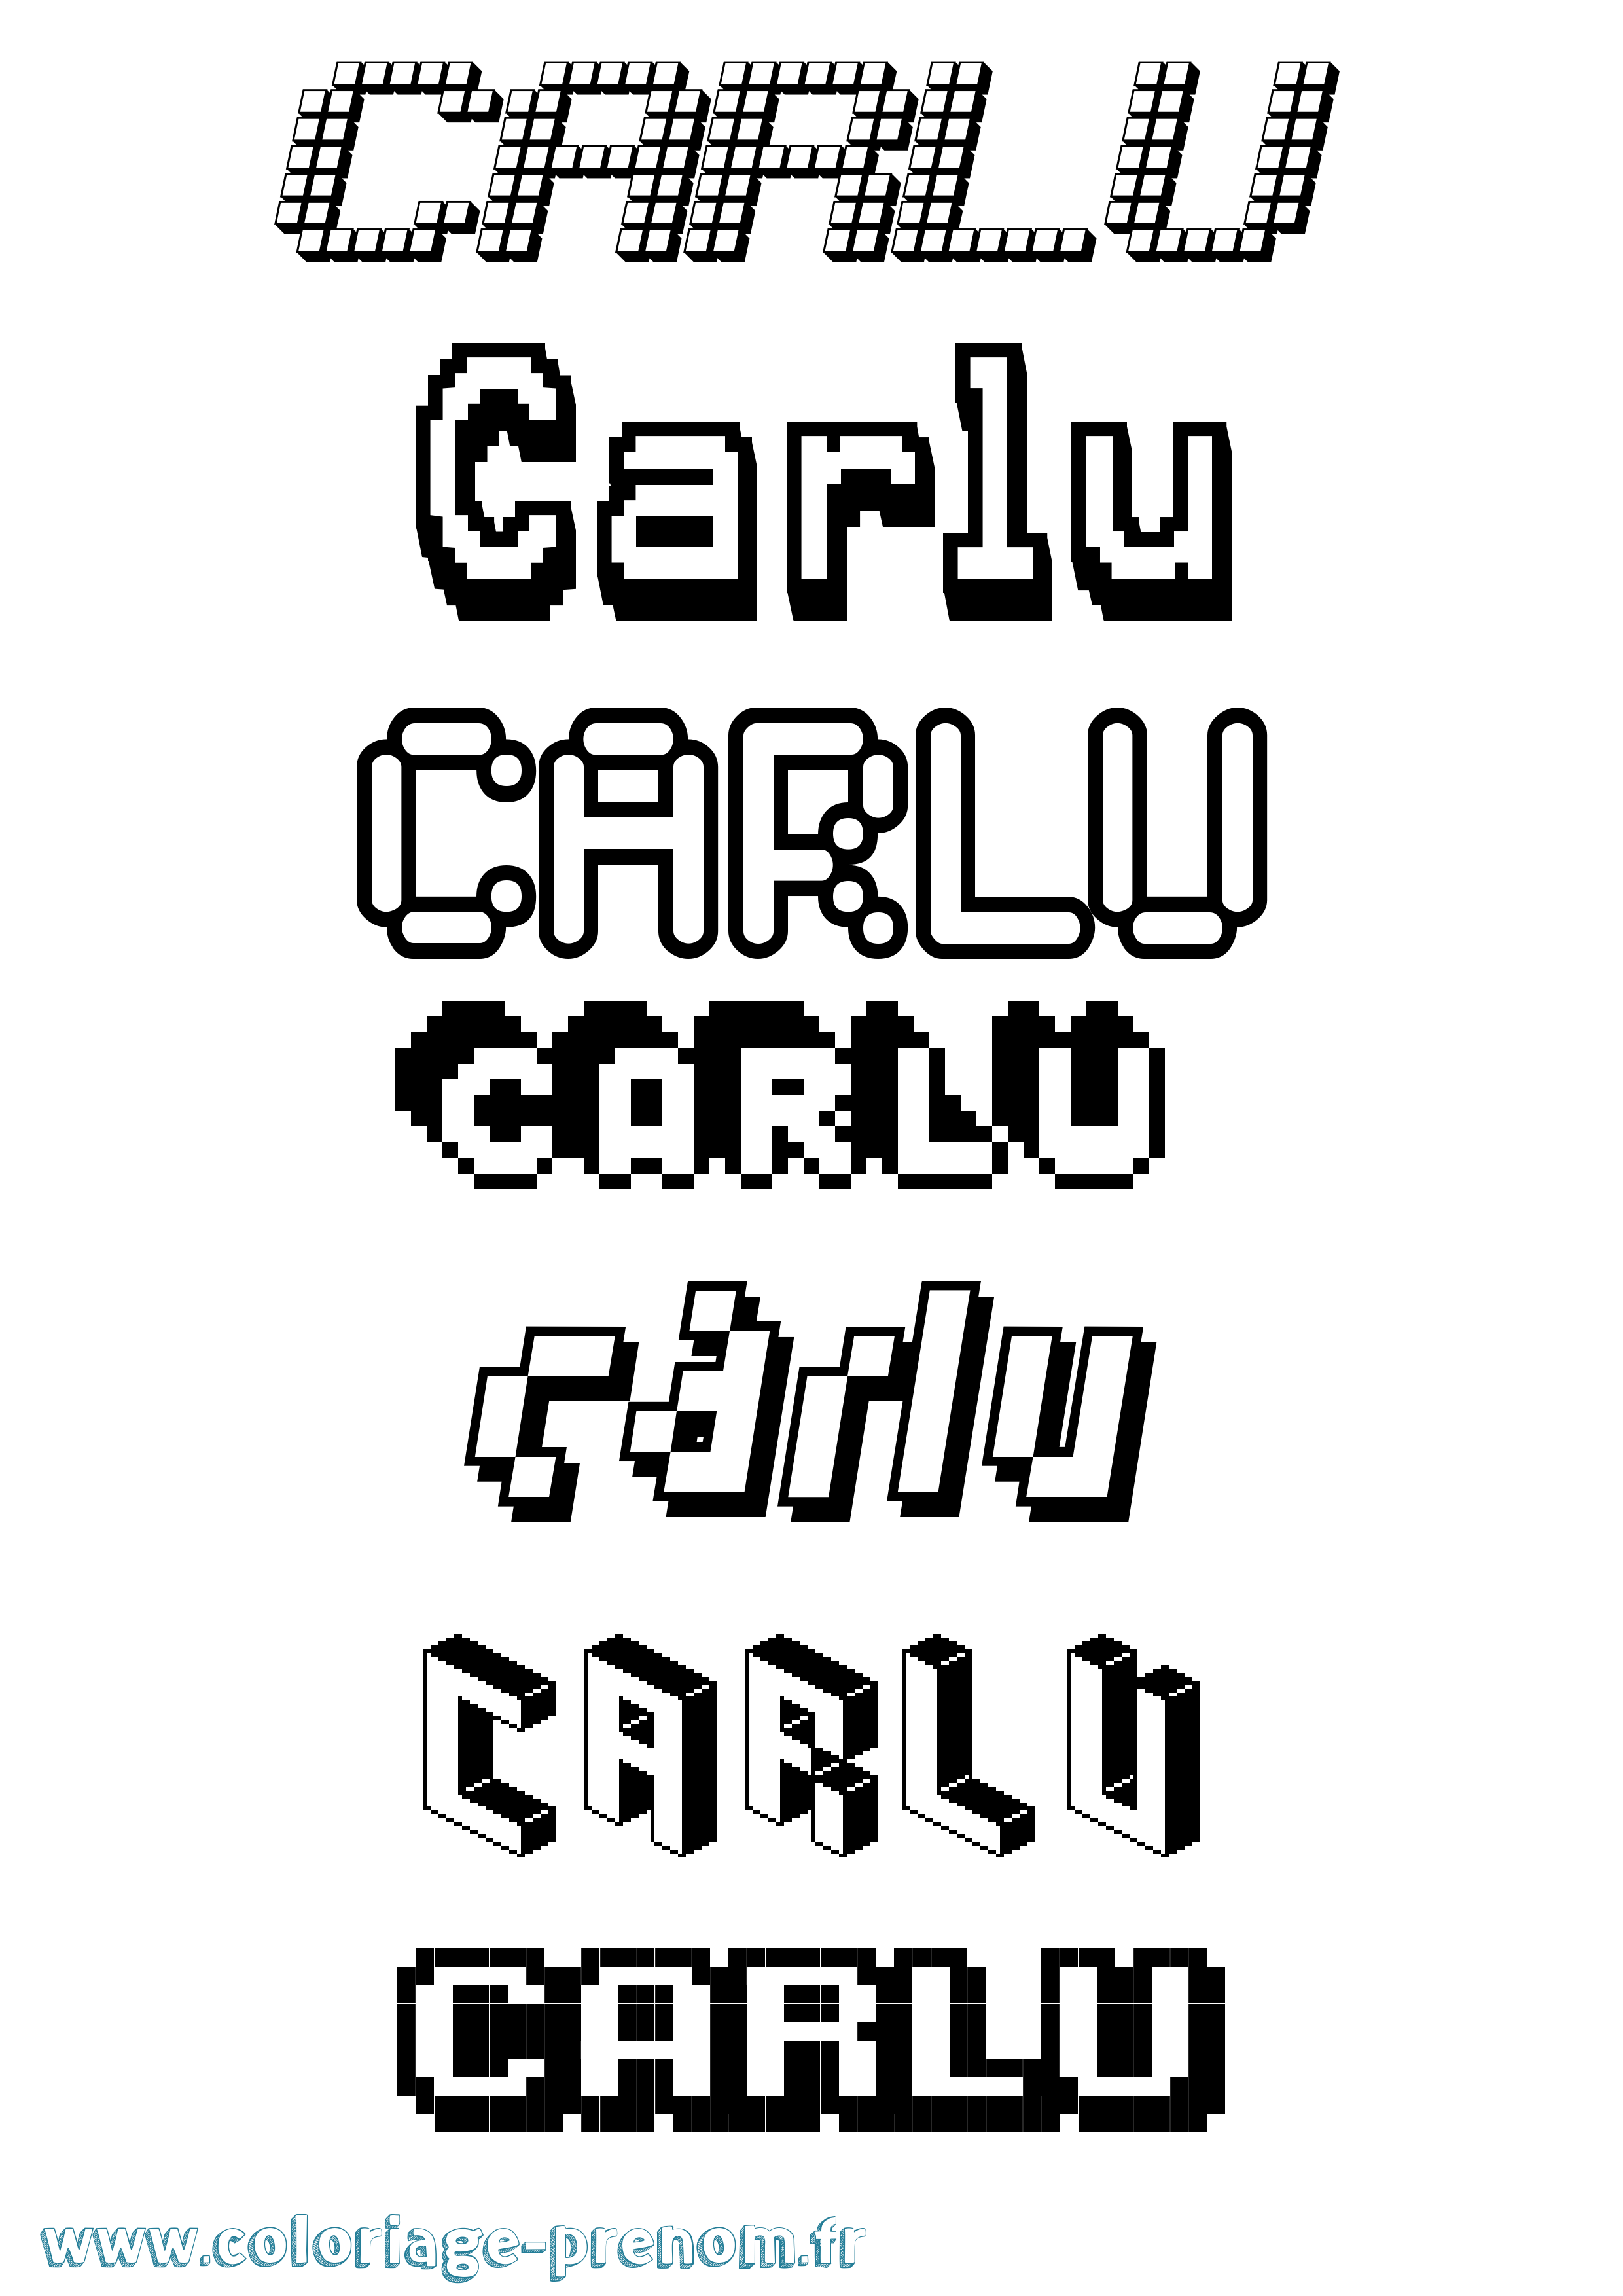 Coloriage prénom Carlu Pixel